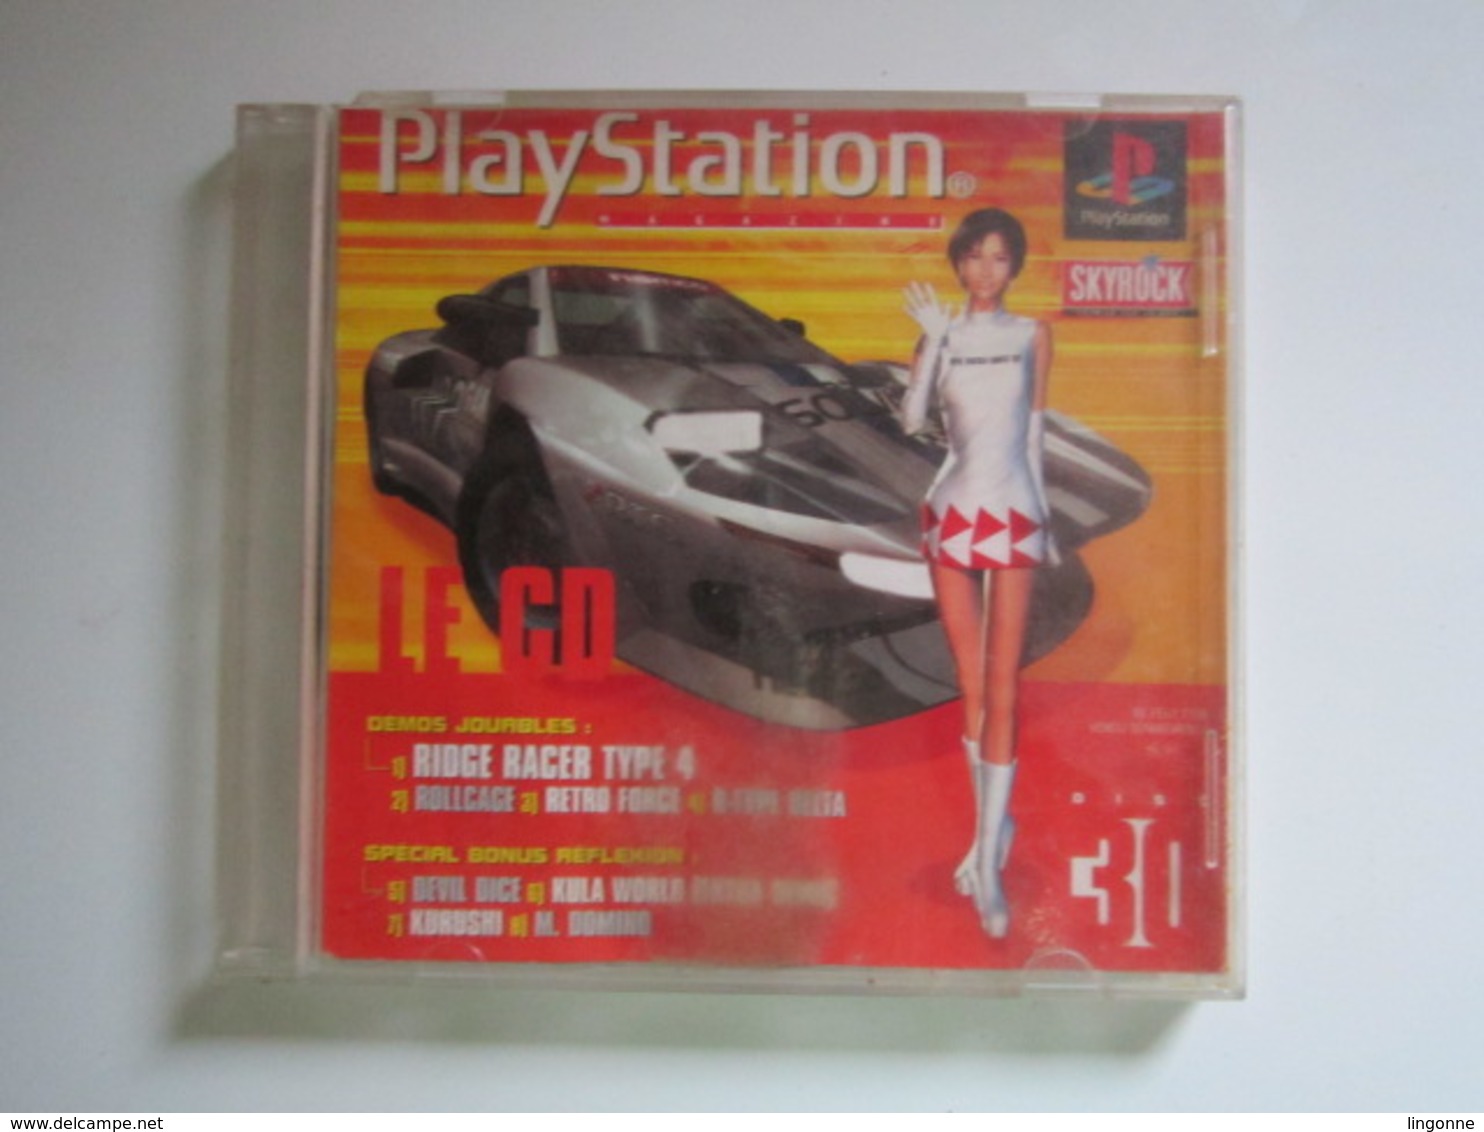 Sony PlayStation DISC 30 RIDGE RACER TYPE 4 ROLLCAGE RETRO FORCE R-TYPE DELTA DEVIL DICE KULA WORLD KURUSHI M.DOMINO - Playstation